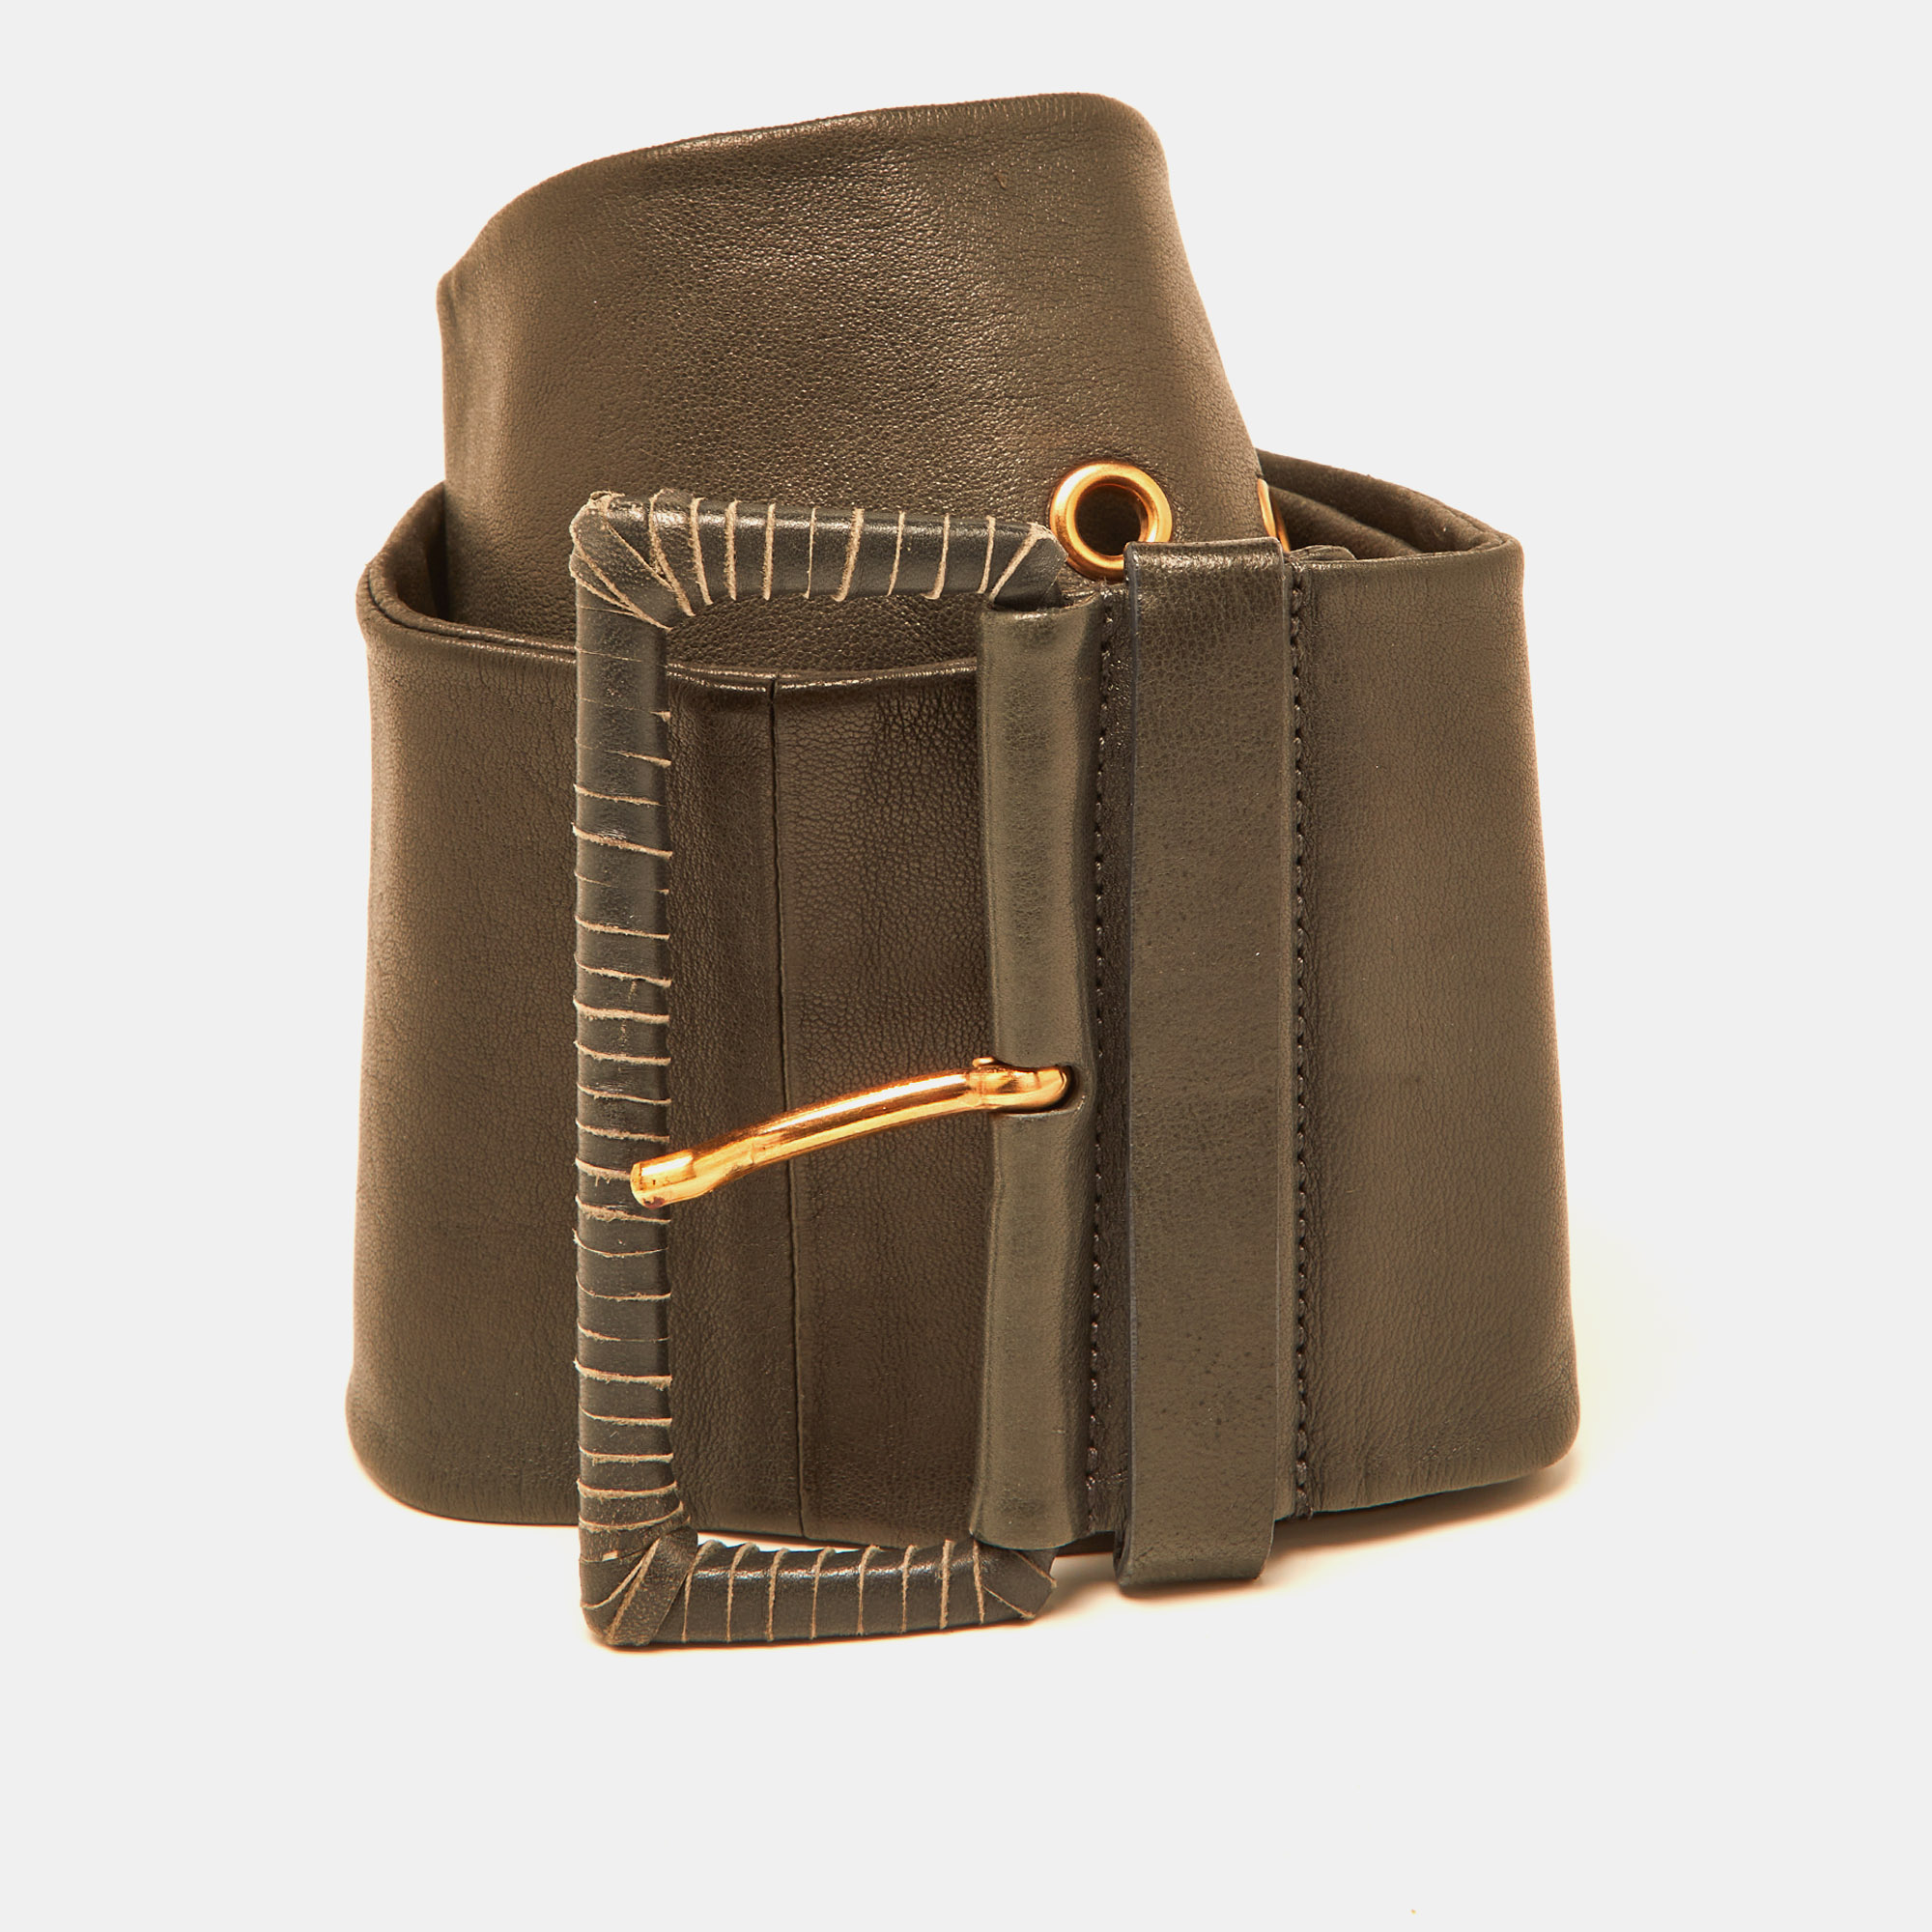 Prada grey leather wide waist belt 80cm